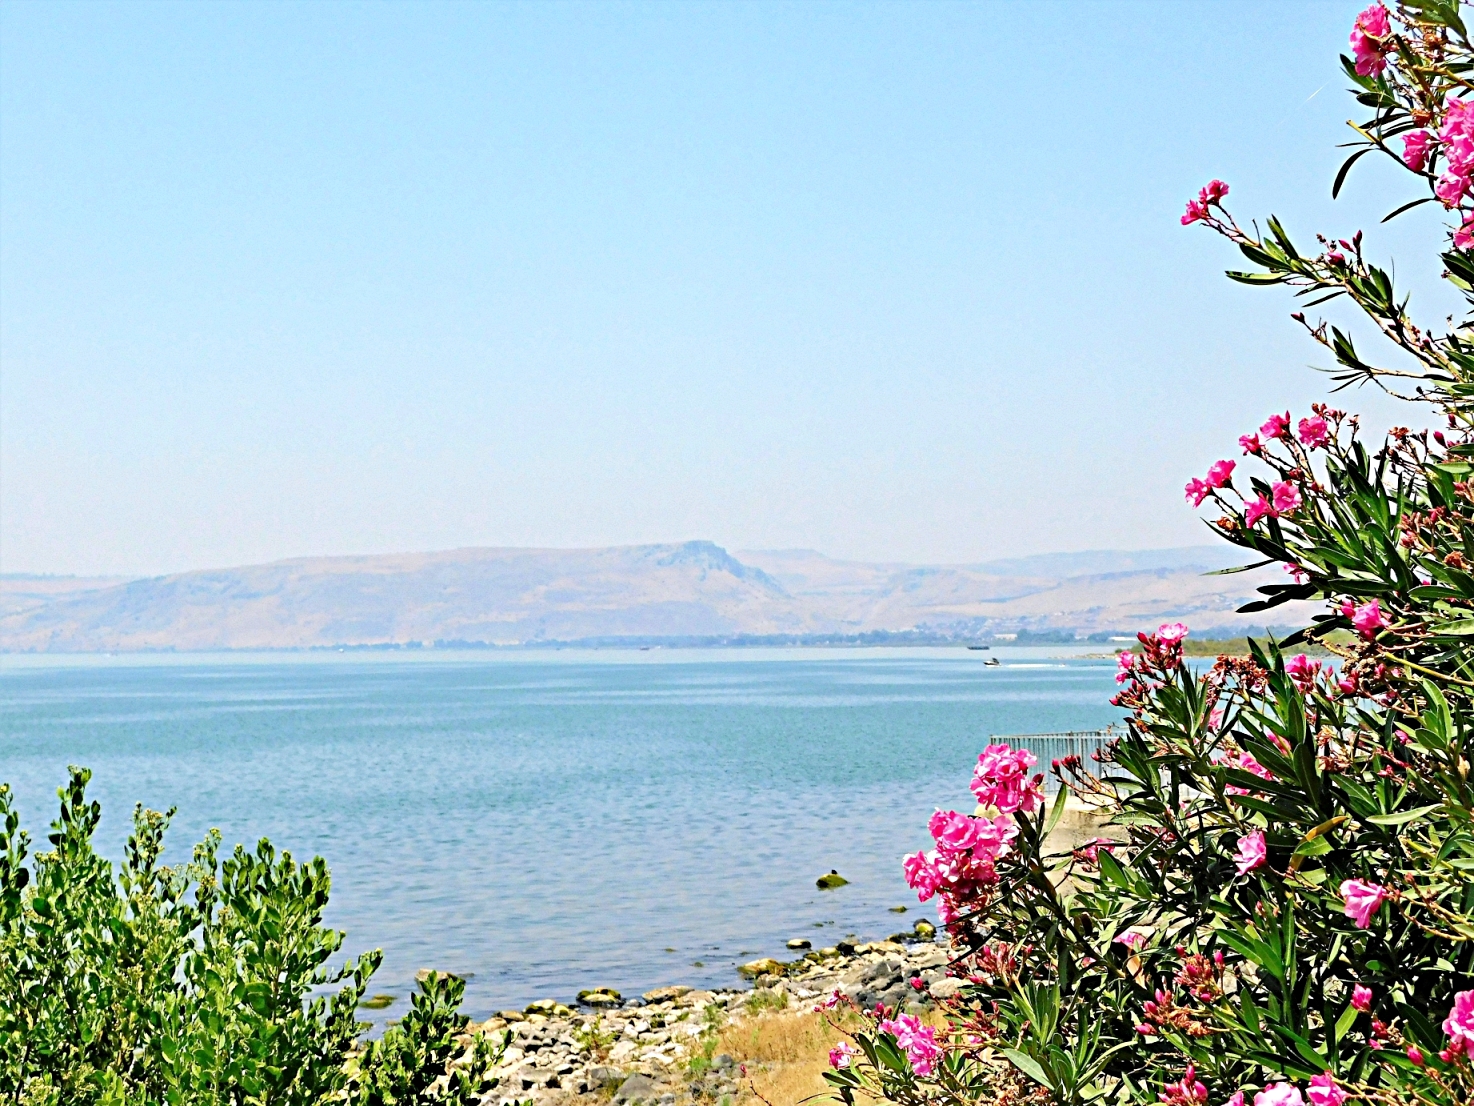 Capharnaum - the Sea of Galilee Photo credit Sr. Amata CSFN